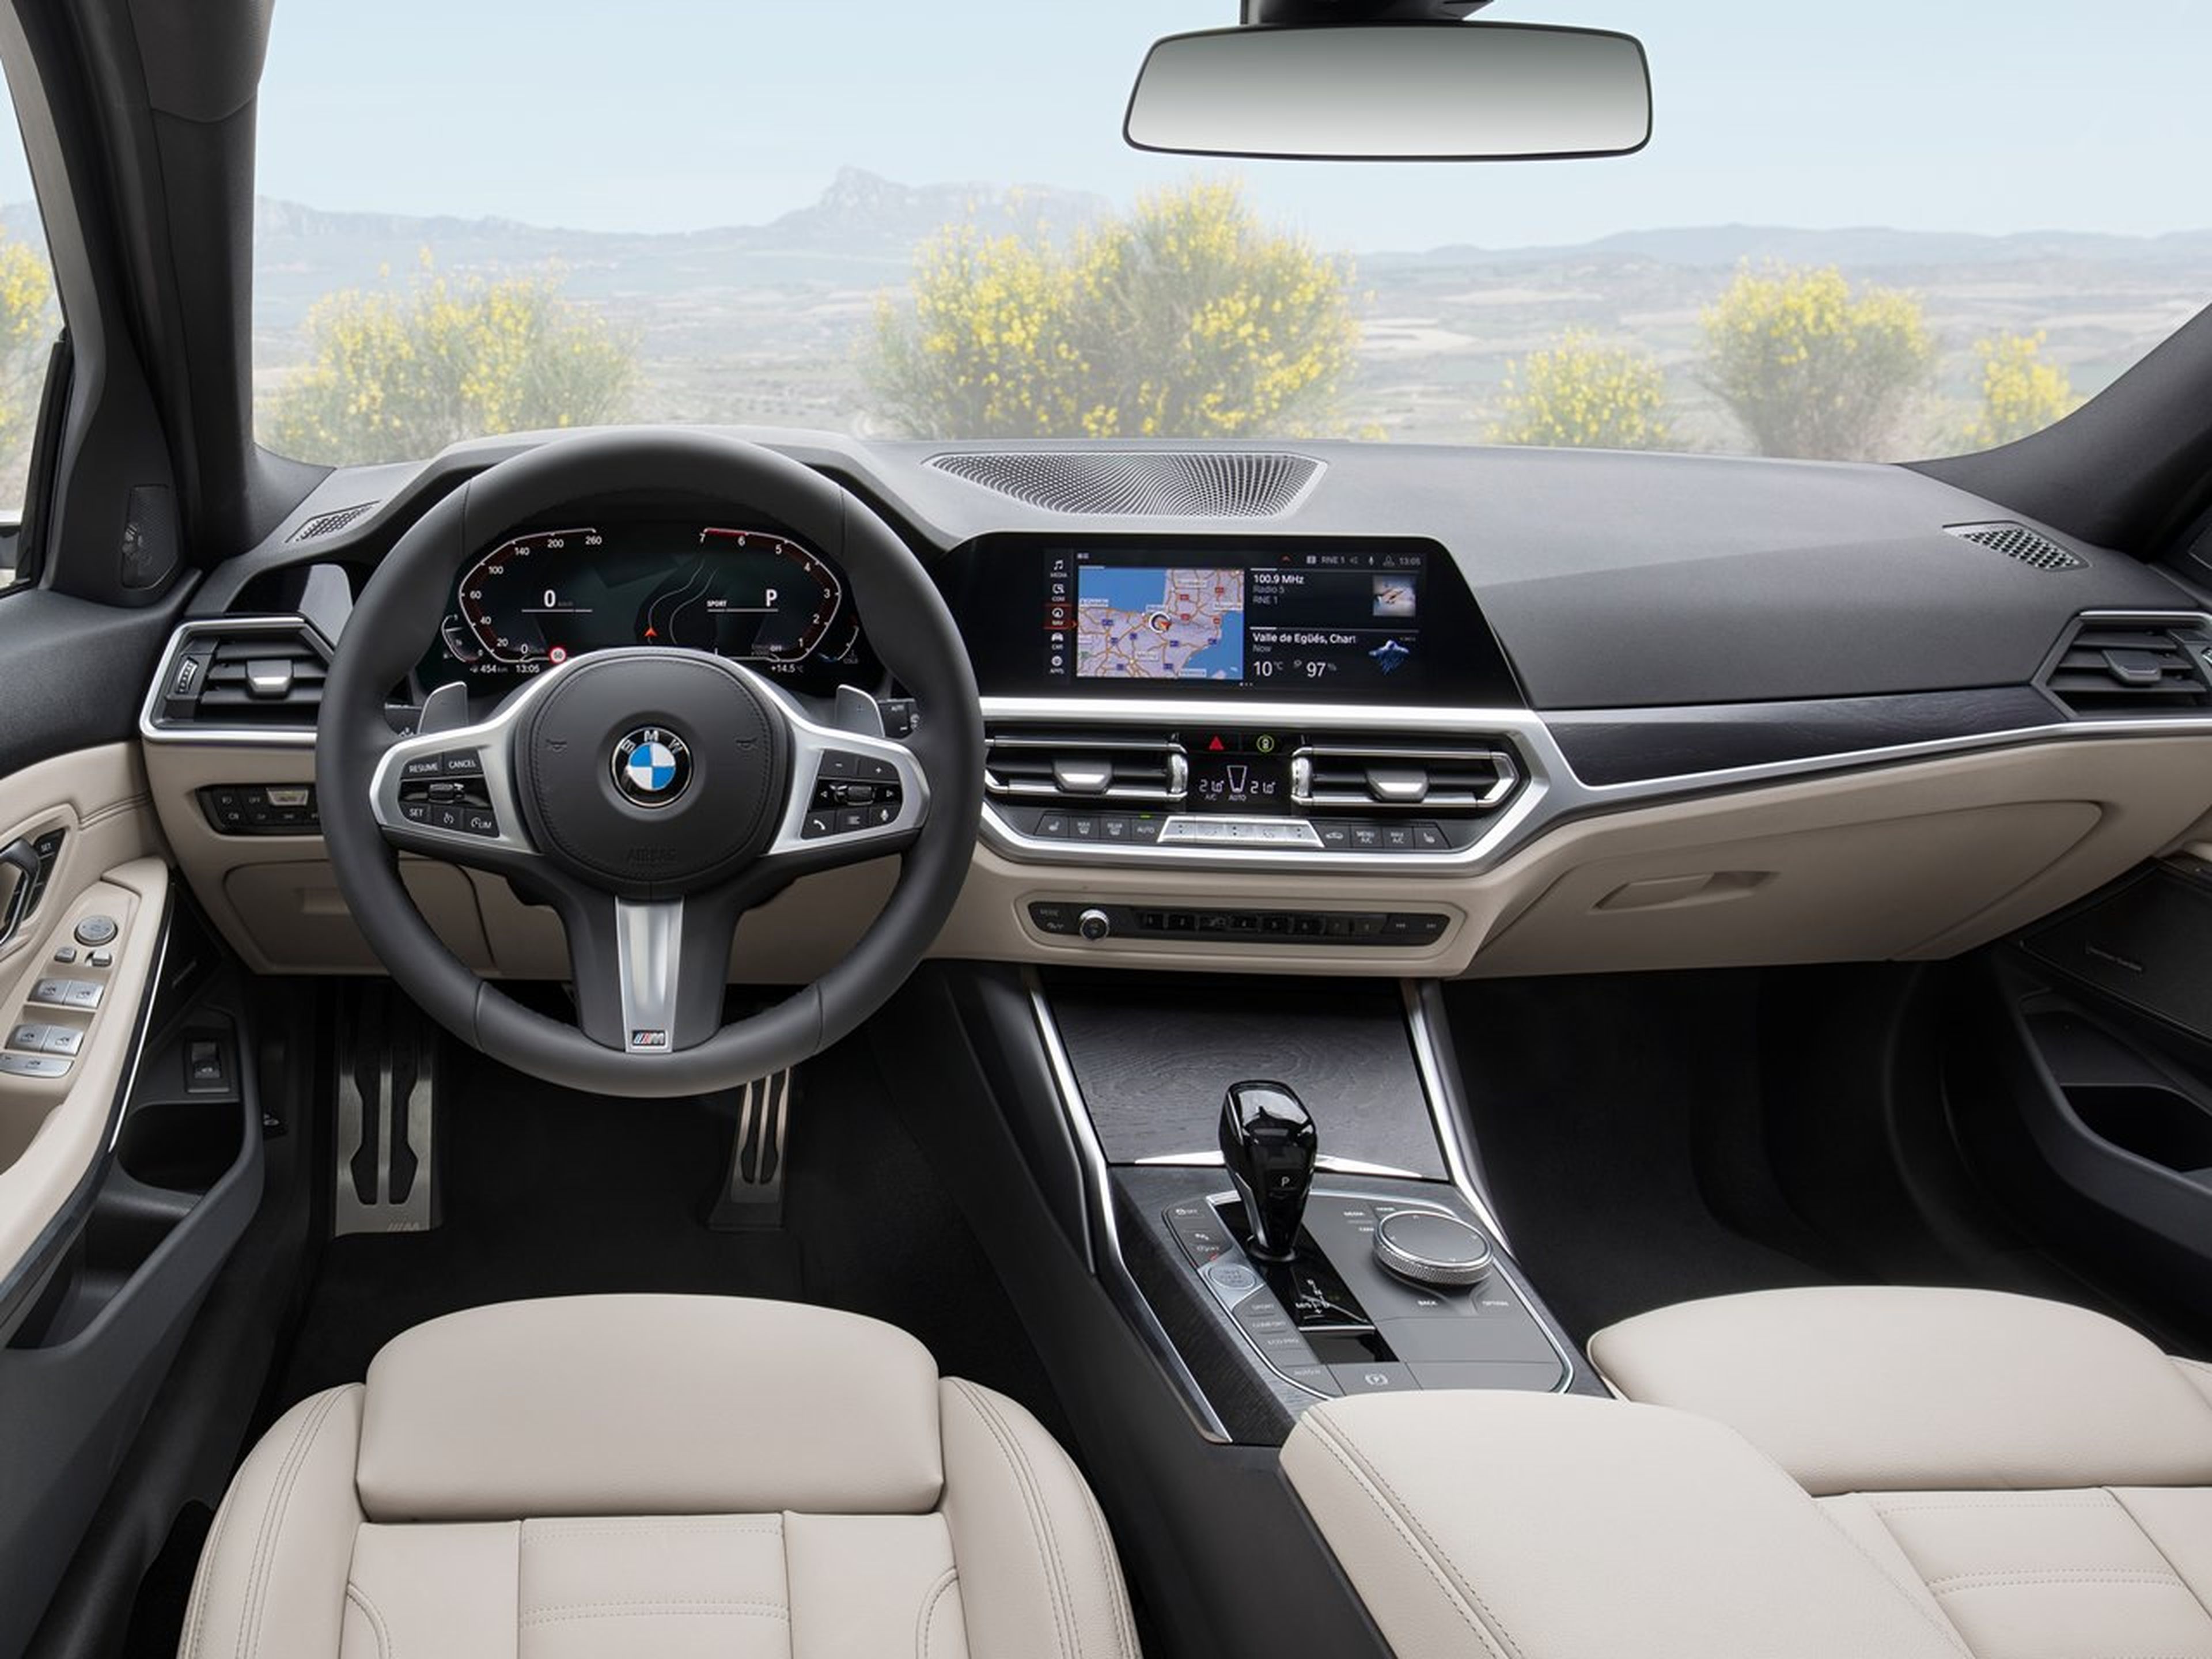 BMW Serie 3 Touring interior 